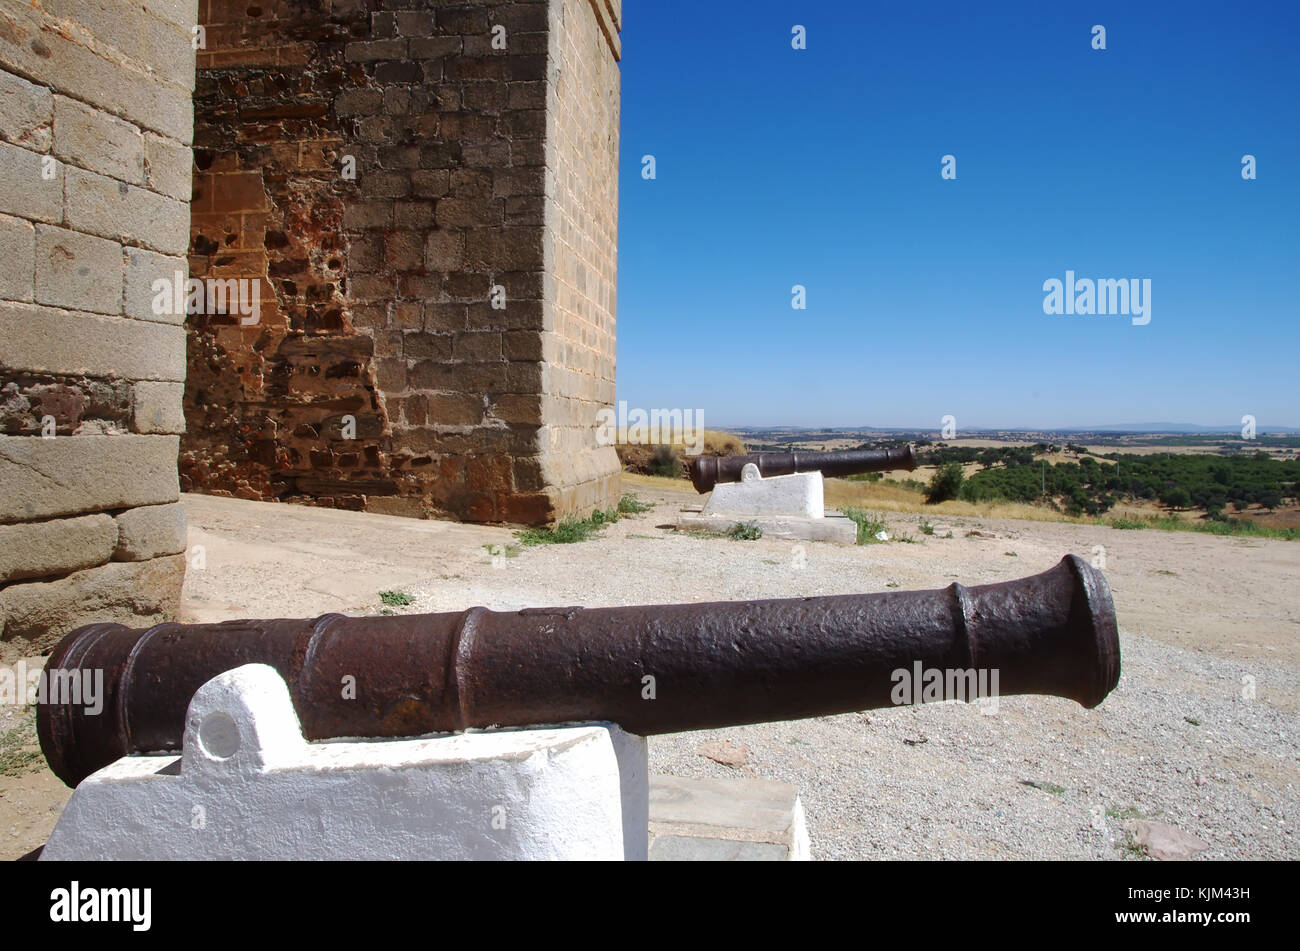 Old cannon in portuguese castle Stock Photo